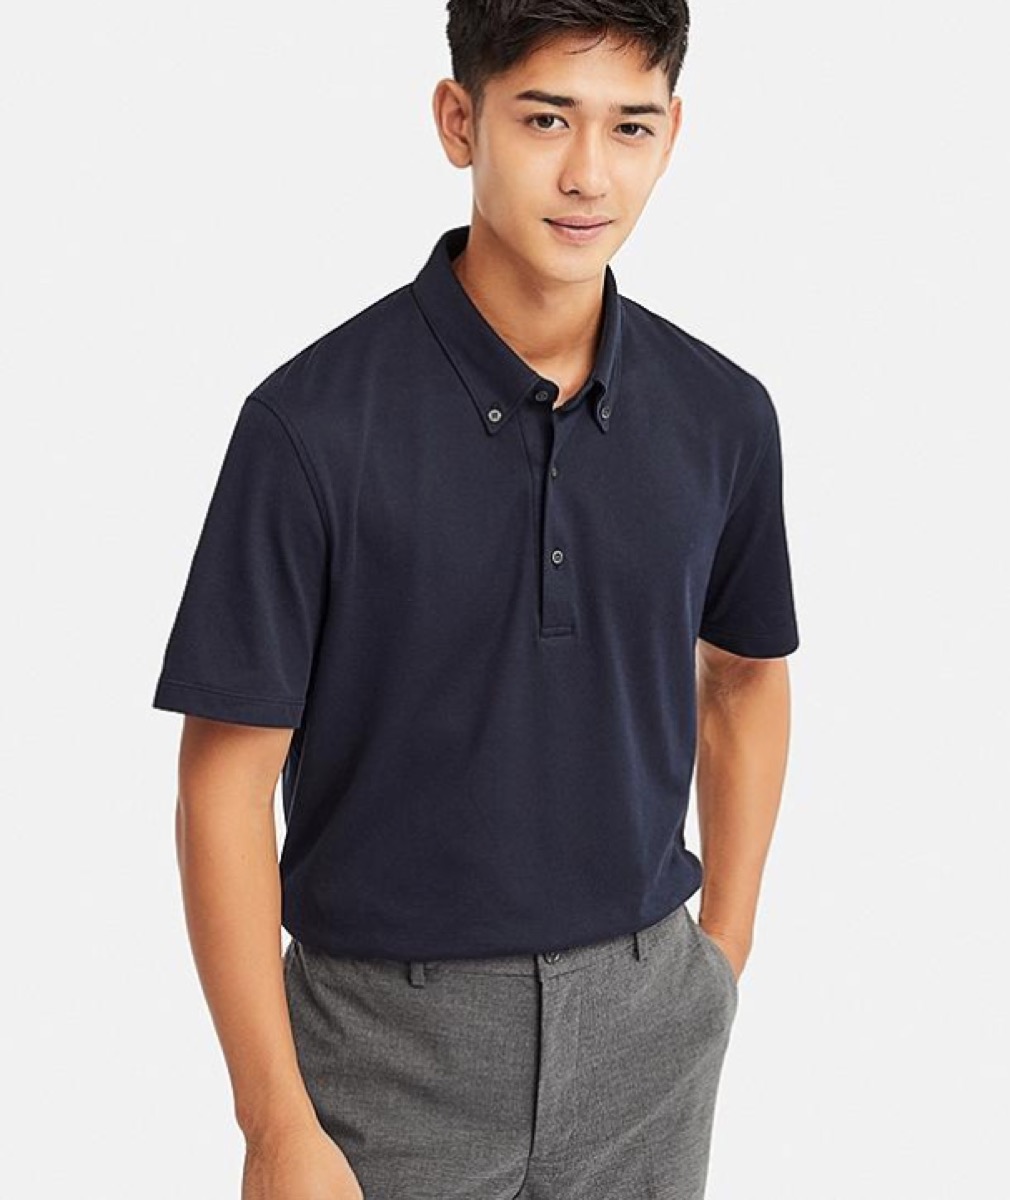 uniqlo navy golf shirt